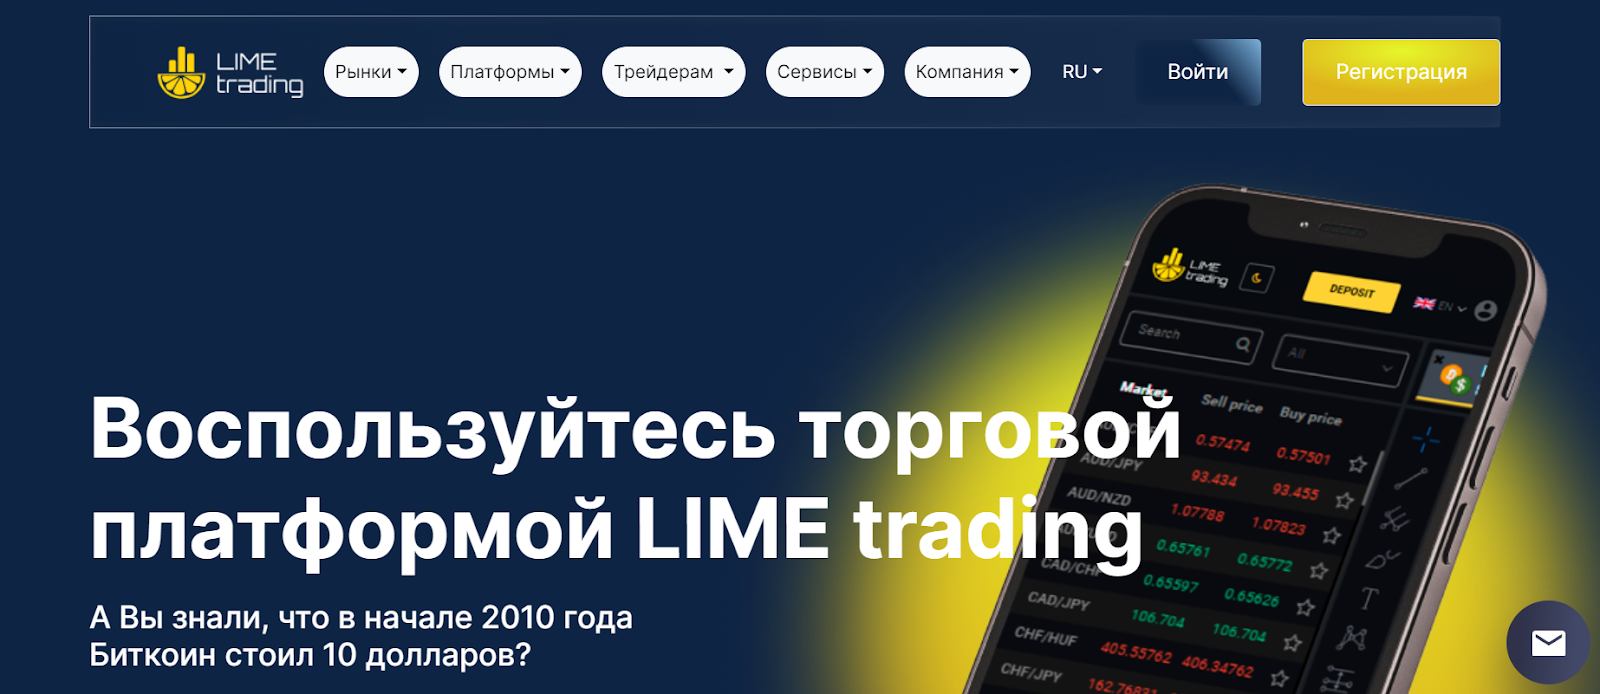 Lime Trading официальный сайт